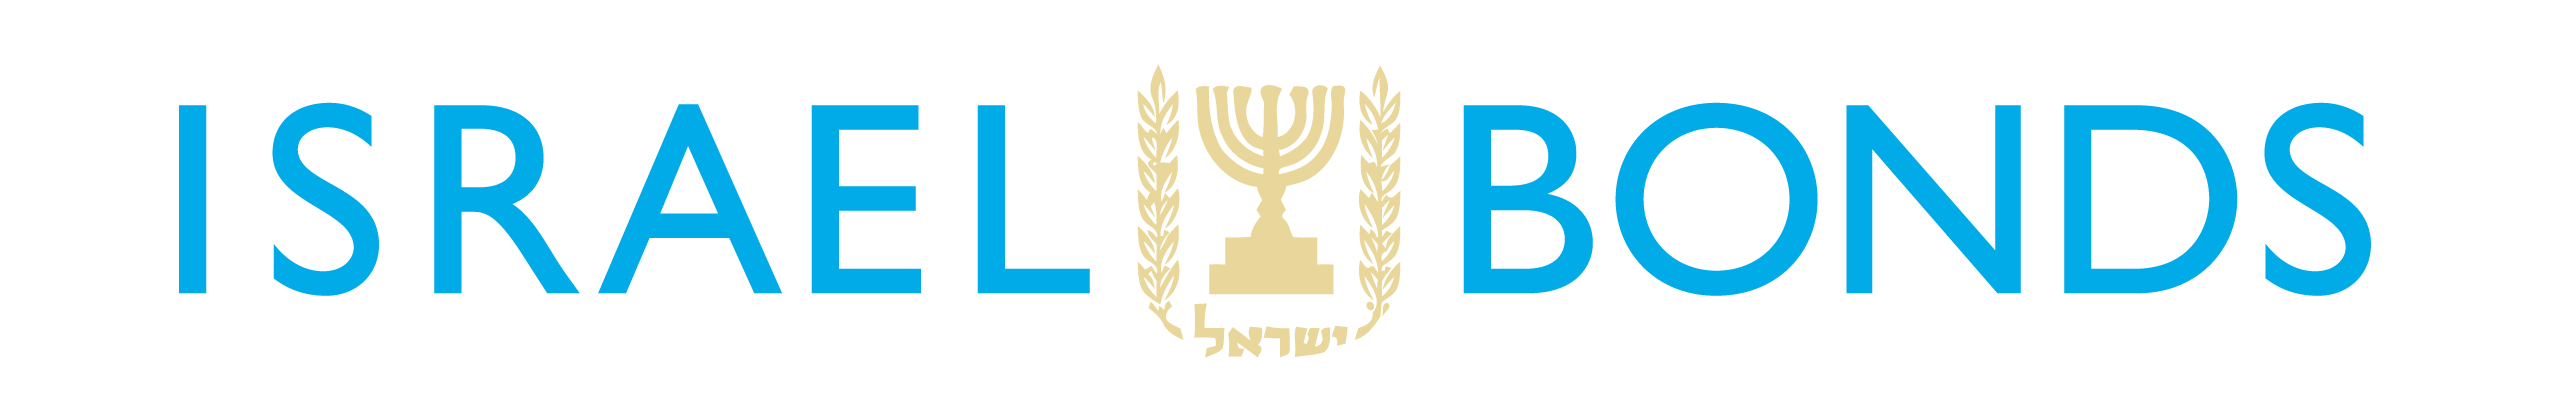 Israel Bonds Logotype Blue Gold Crest